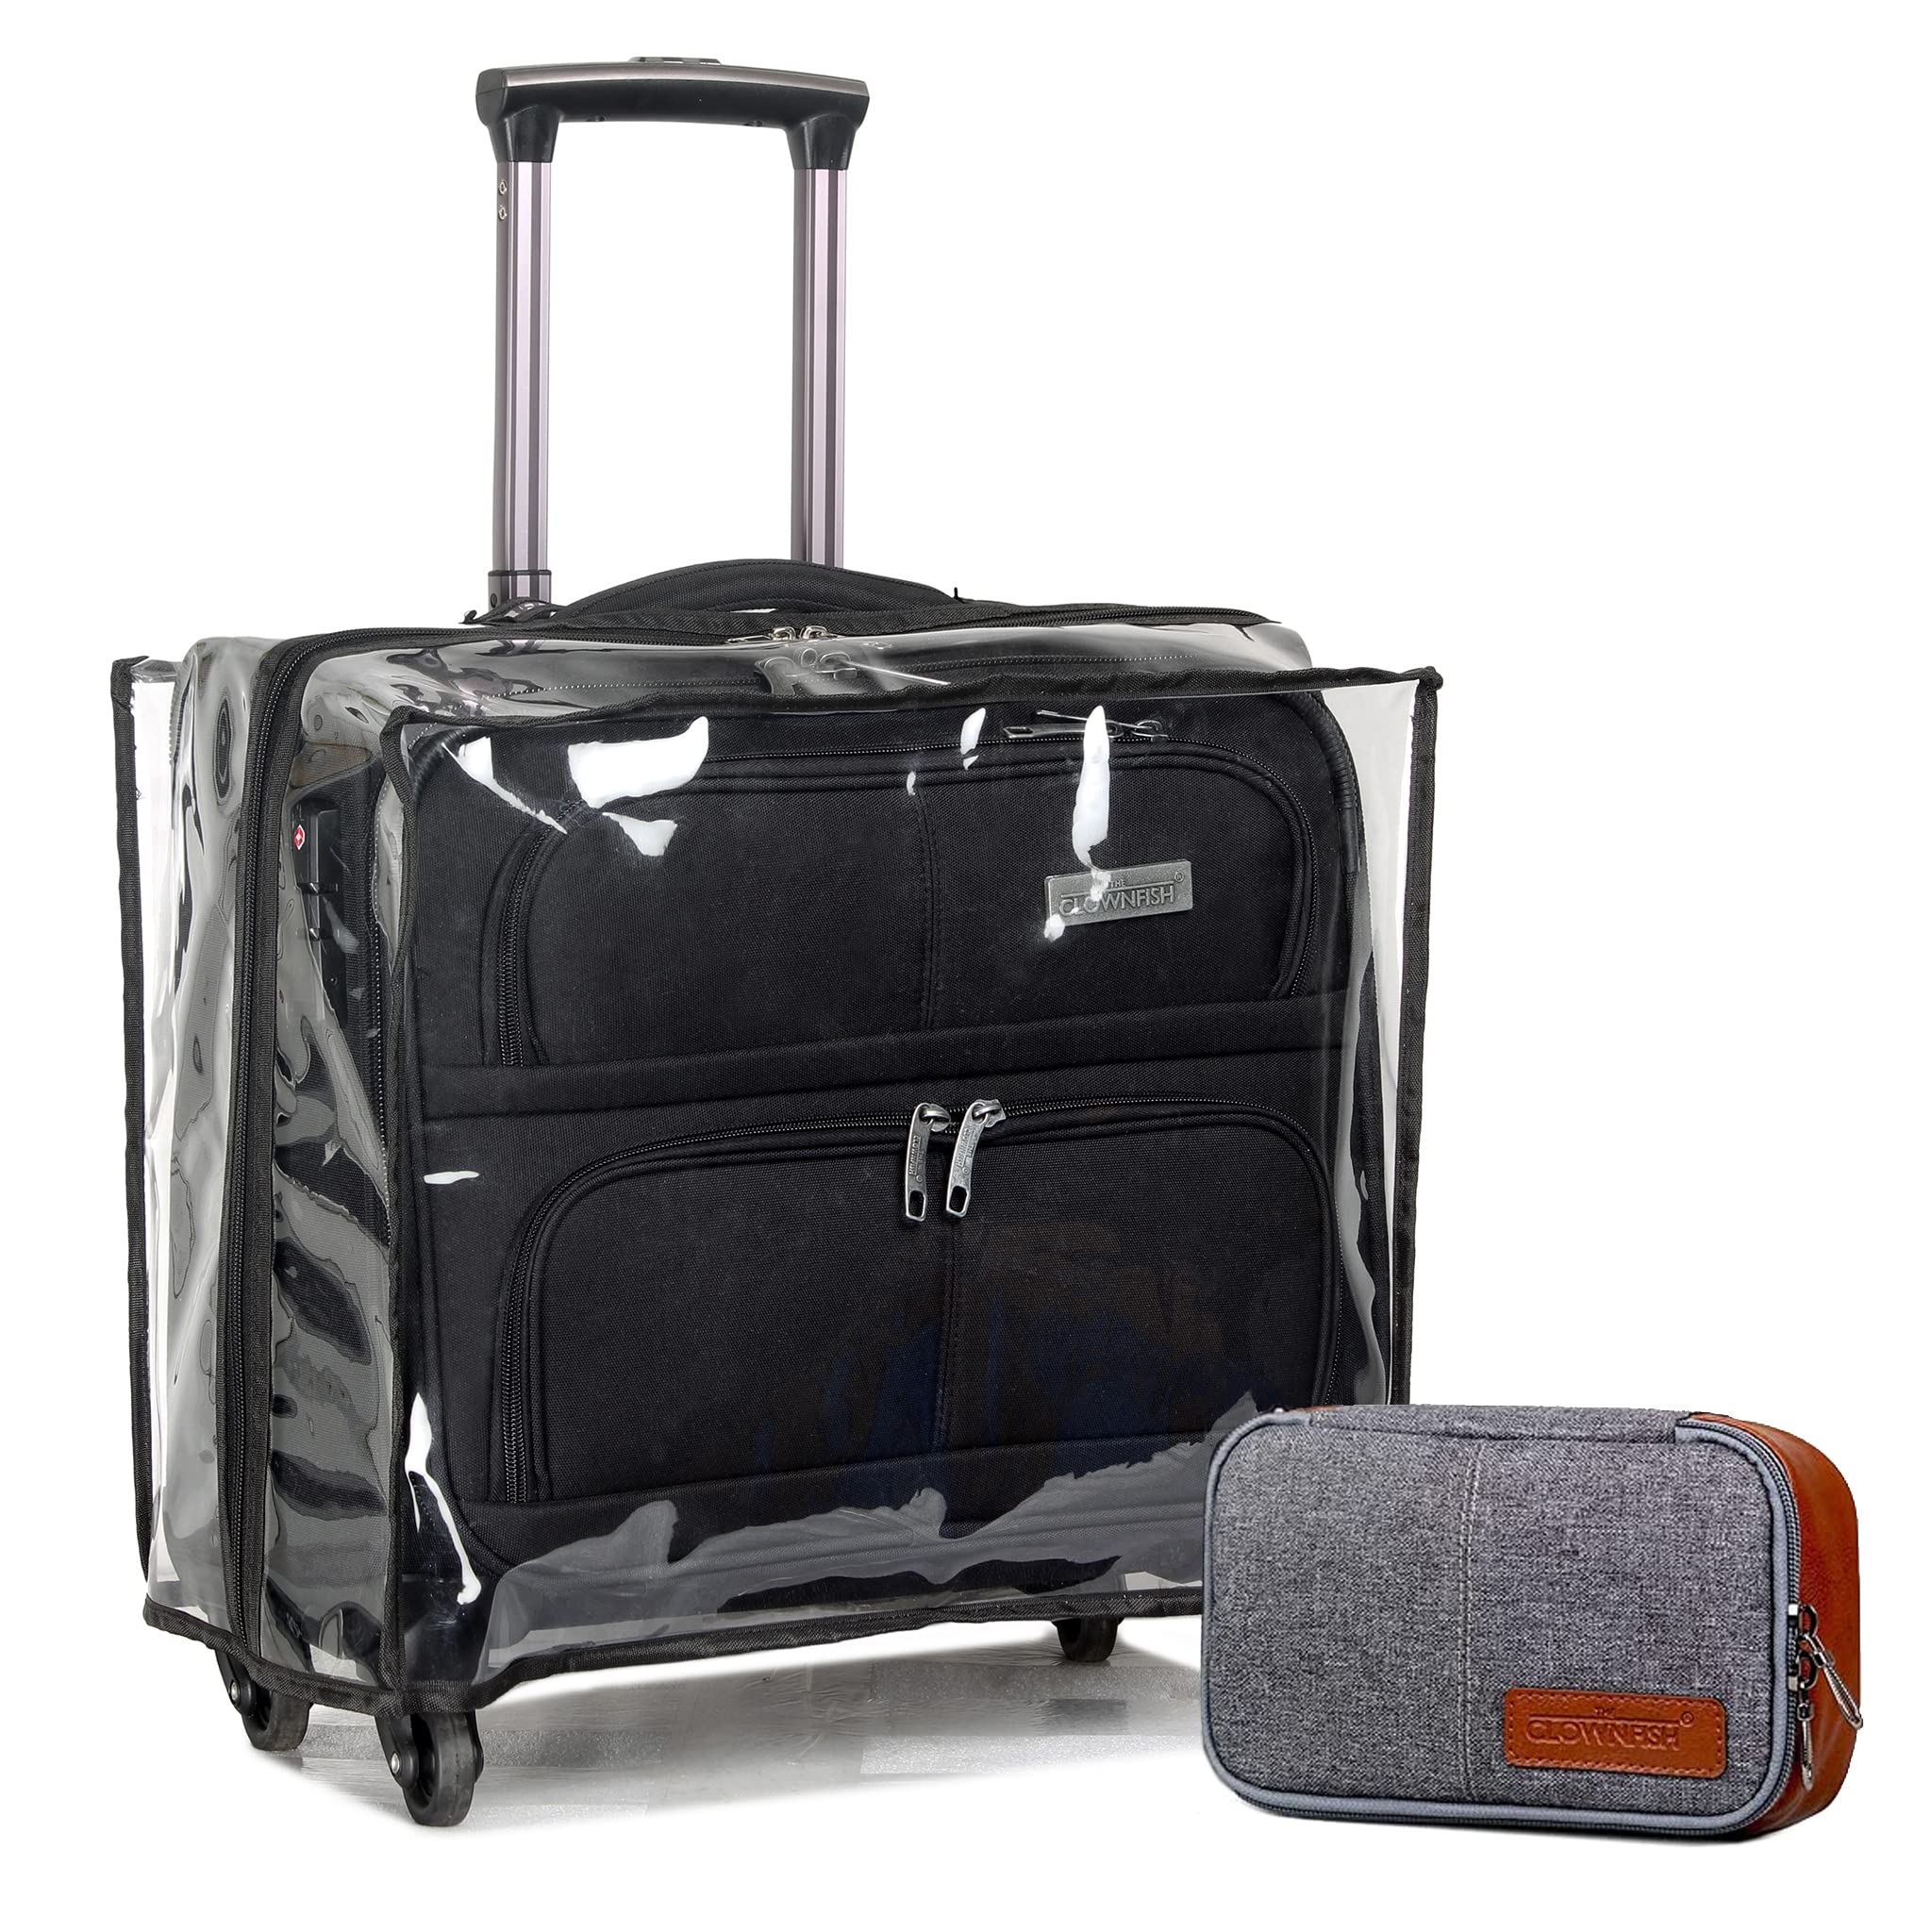 THE CLOWNFISH Trailblazer Series Luggage Polyester Soft Case Four Wheel Suitcase 15.6 inch Laptop Ipad Trolley Bag with TSA Lock - Black (44 cm, 17.3 inch)